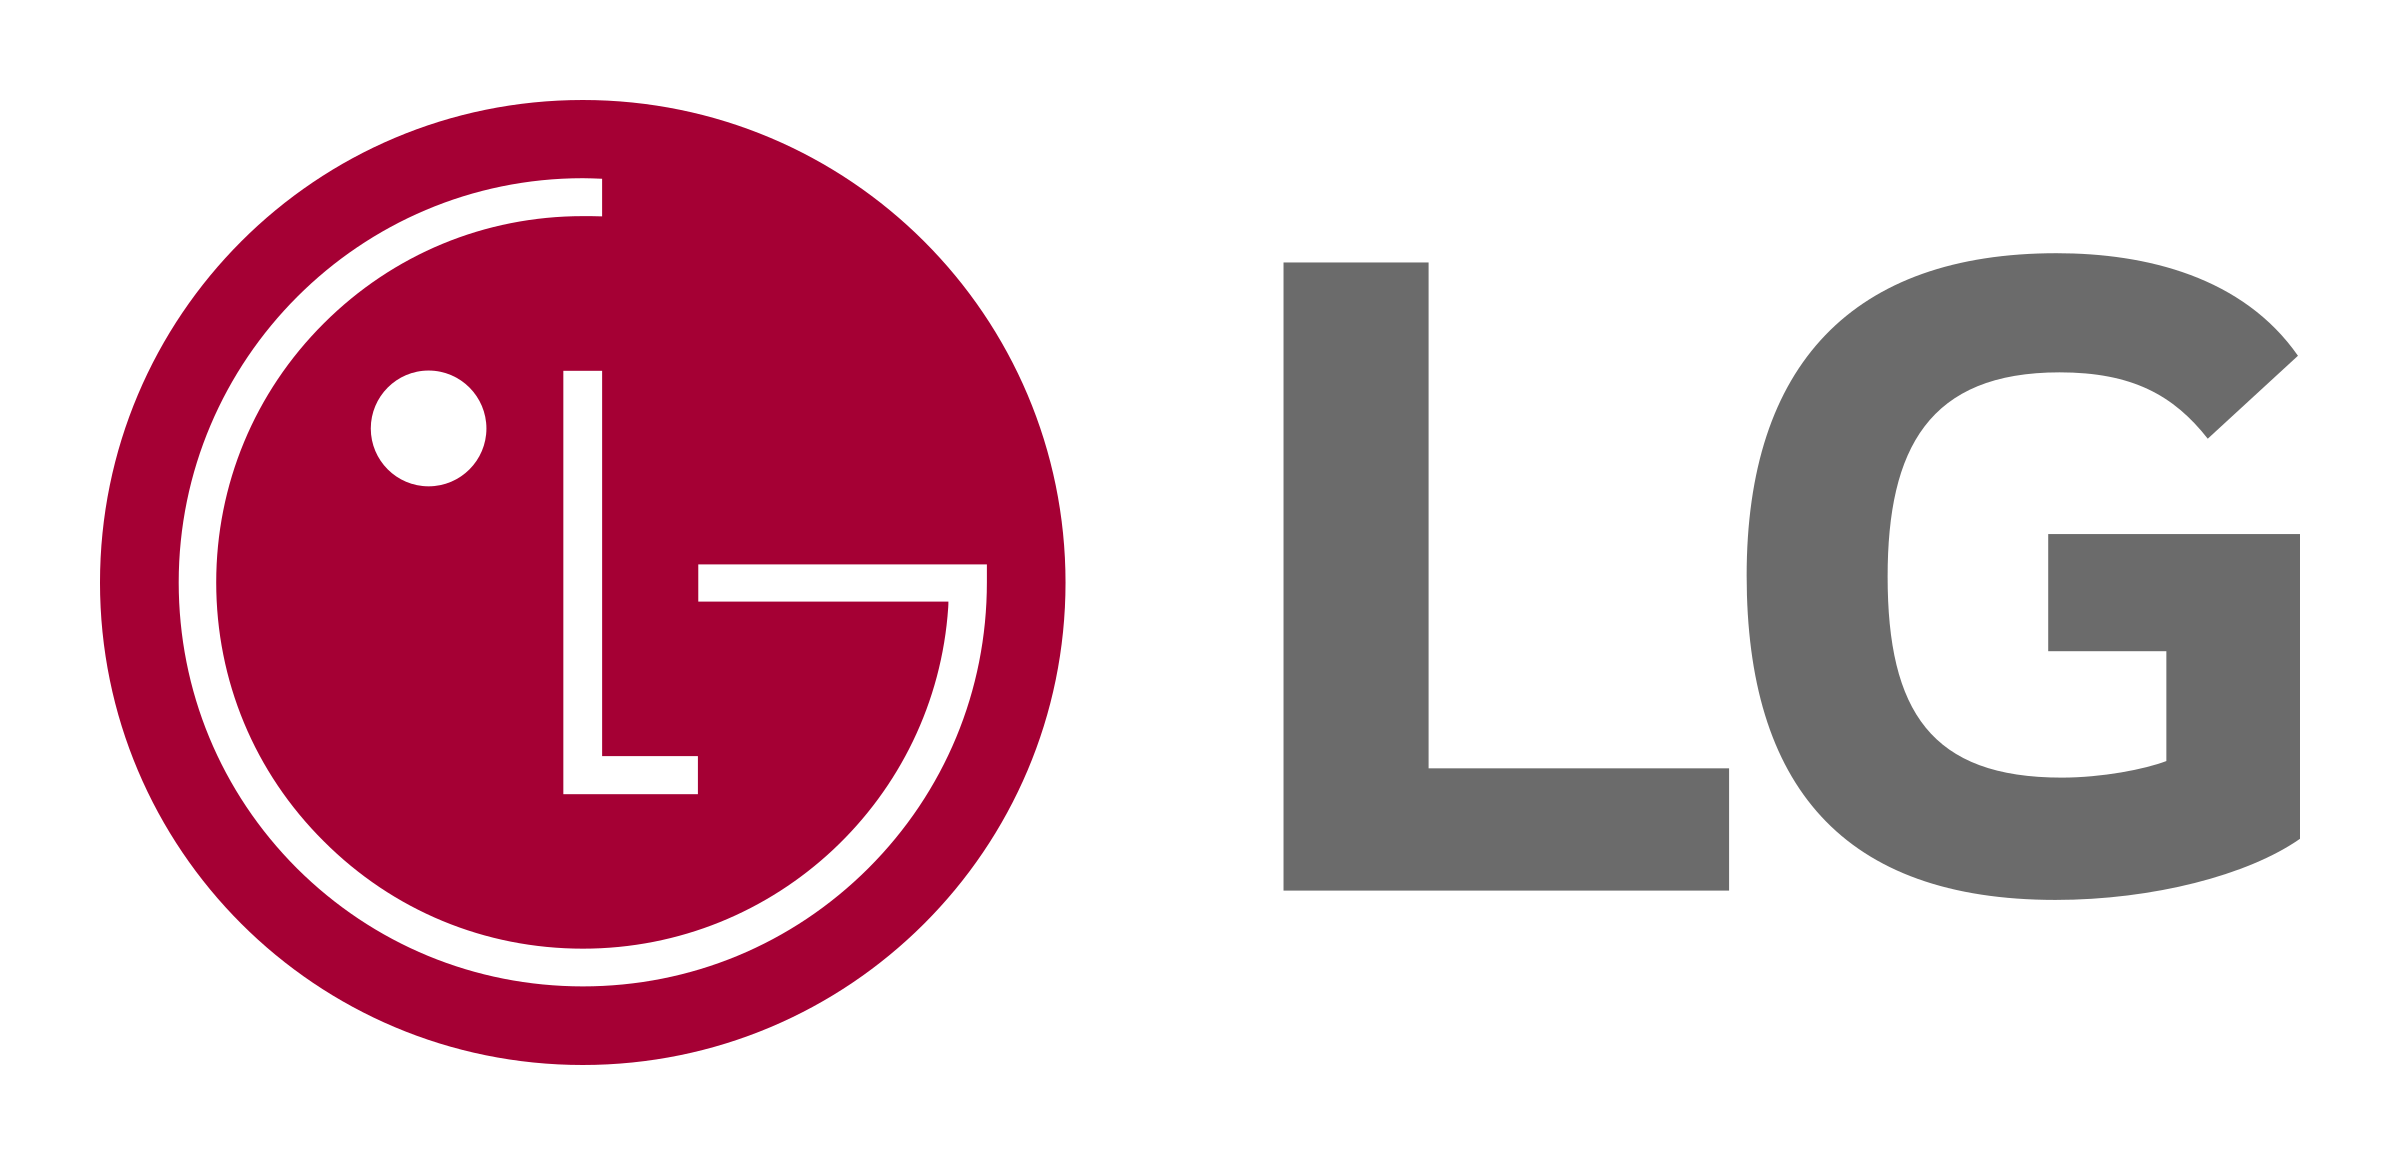 lg-logo-png-transparent.png